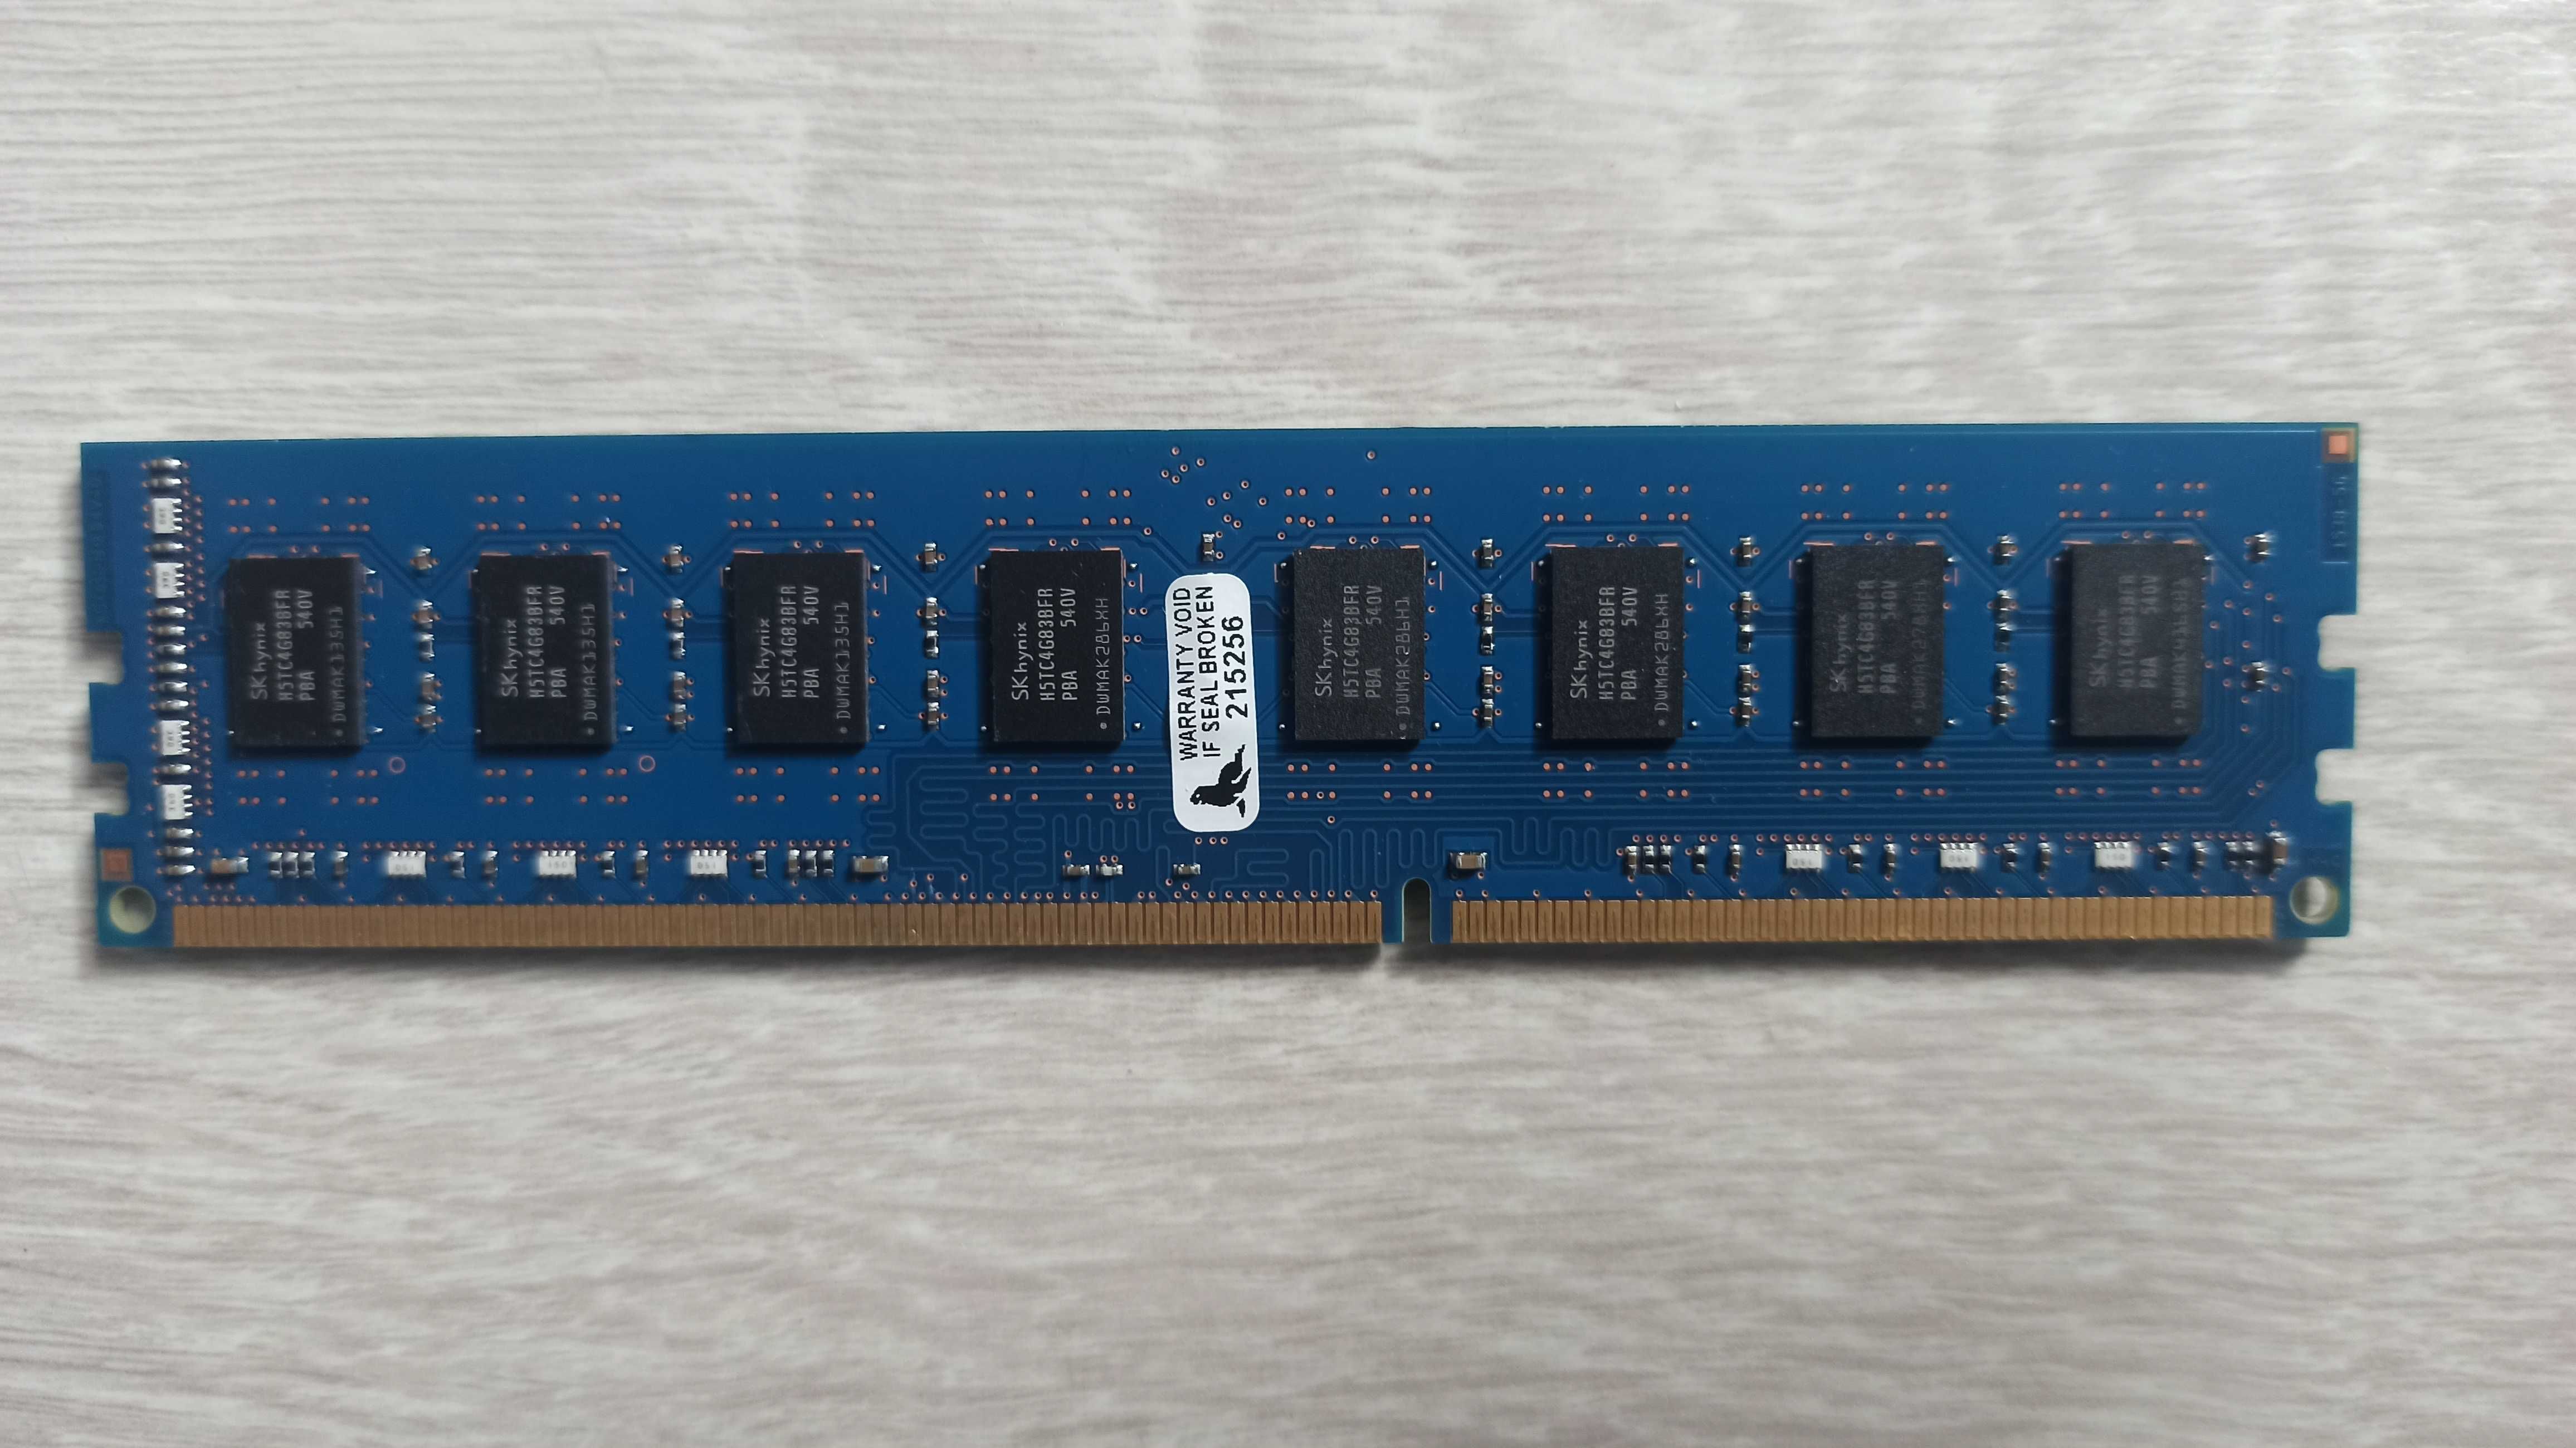 Pamięć RAM DDR3 Hynix 8 GB 2Rx8 PC3L-12800U, HMT41GU6BFR8A